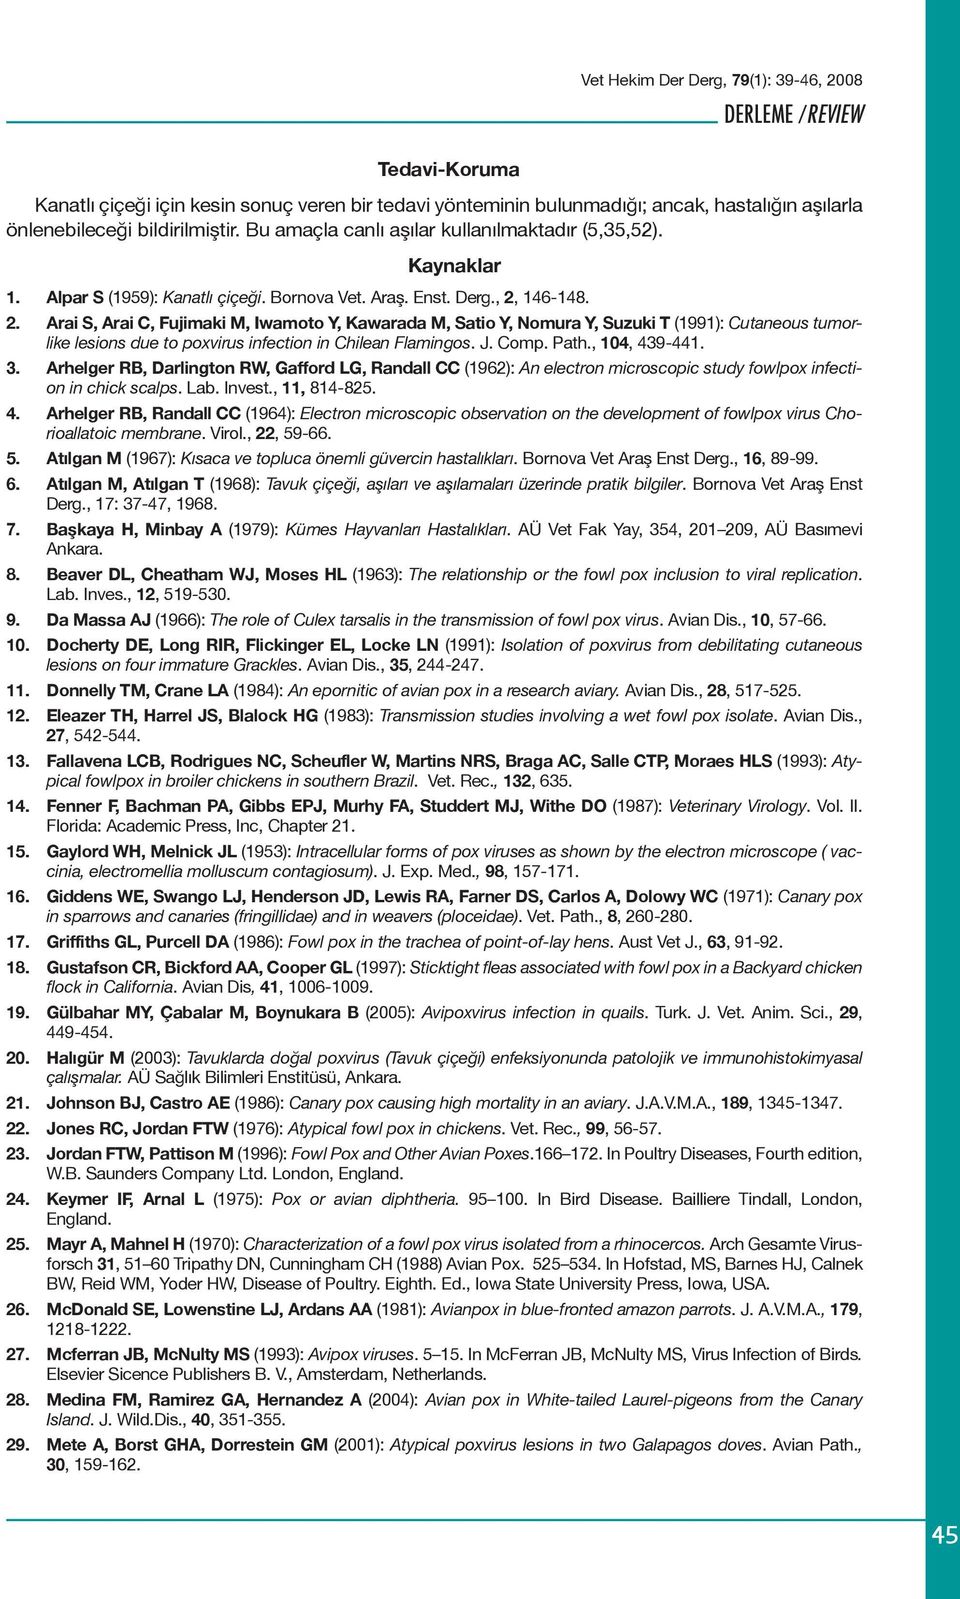 146-148. 2. Arai S, Arai C, Fujimaki M, Iwamoto Y, Kawarada M, Satio Y, Nomura Y, Suzuki T (1991): Cutaneous tumorlike lesions due to poxvirus infection in Chilean Flamingos. J. Comp. Path.